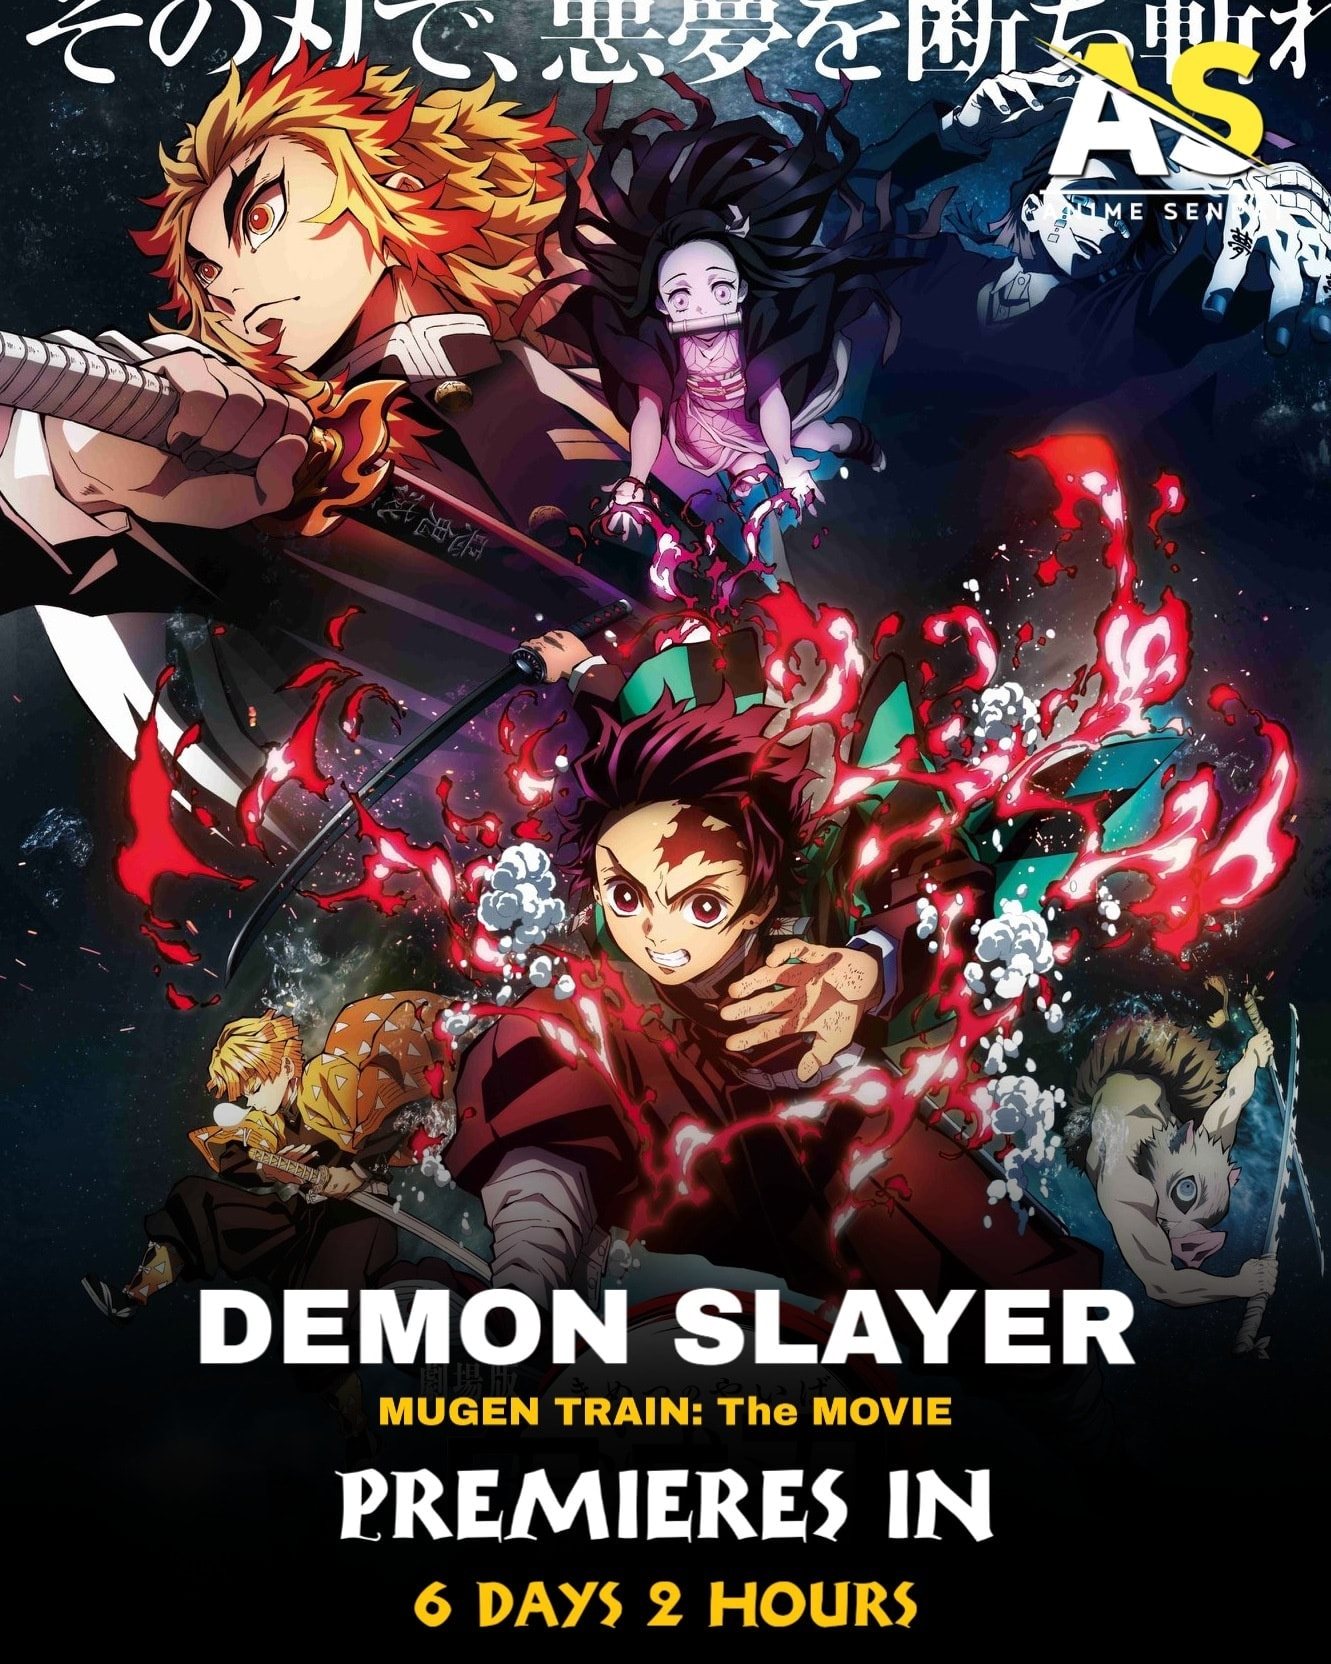 Demon Slayer The Movie Poster